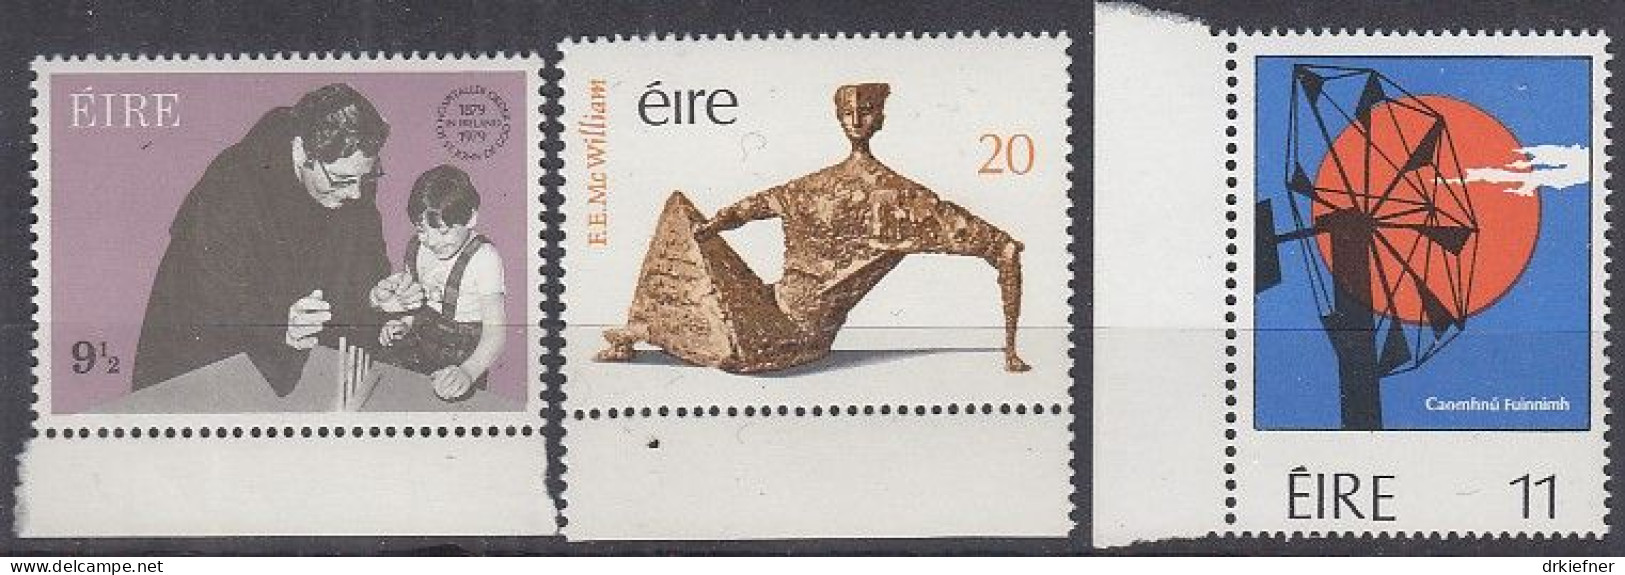 IRLAND  405-407, Postfrisch **, Hospitalorden, Zeitgenössische Kunst, Energiesparmonat, 1979 - Unused Stamps